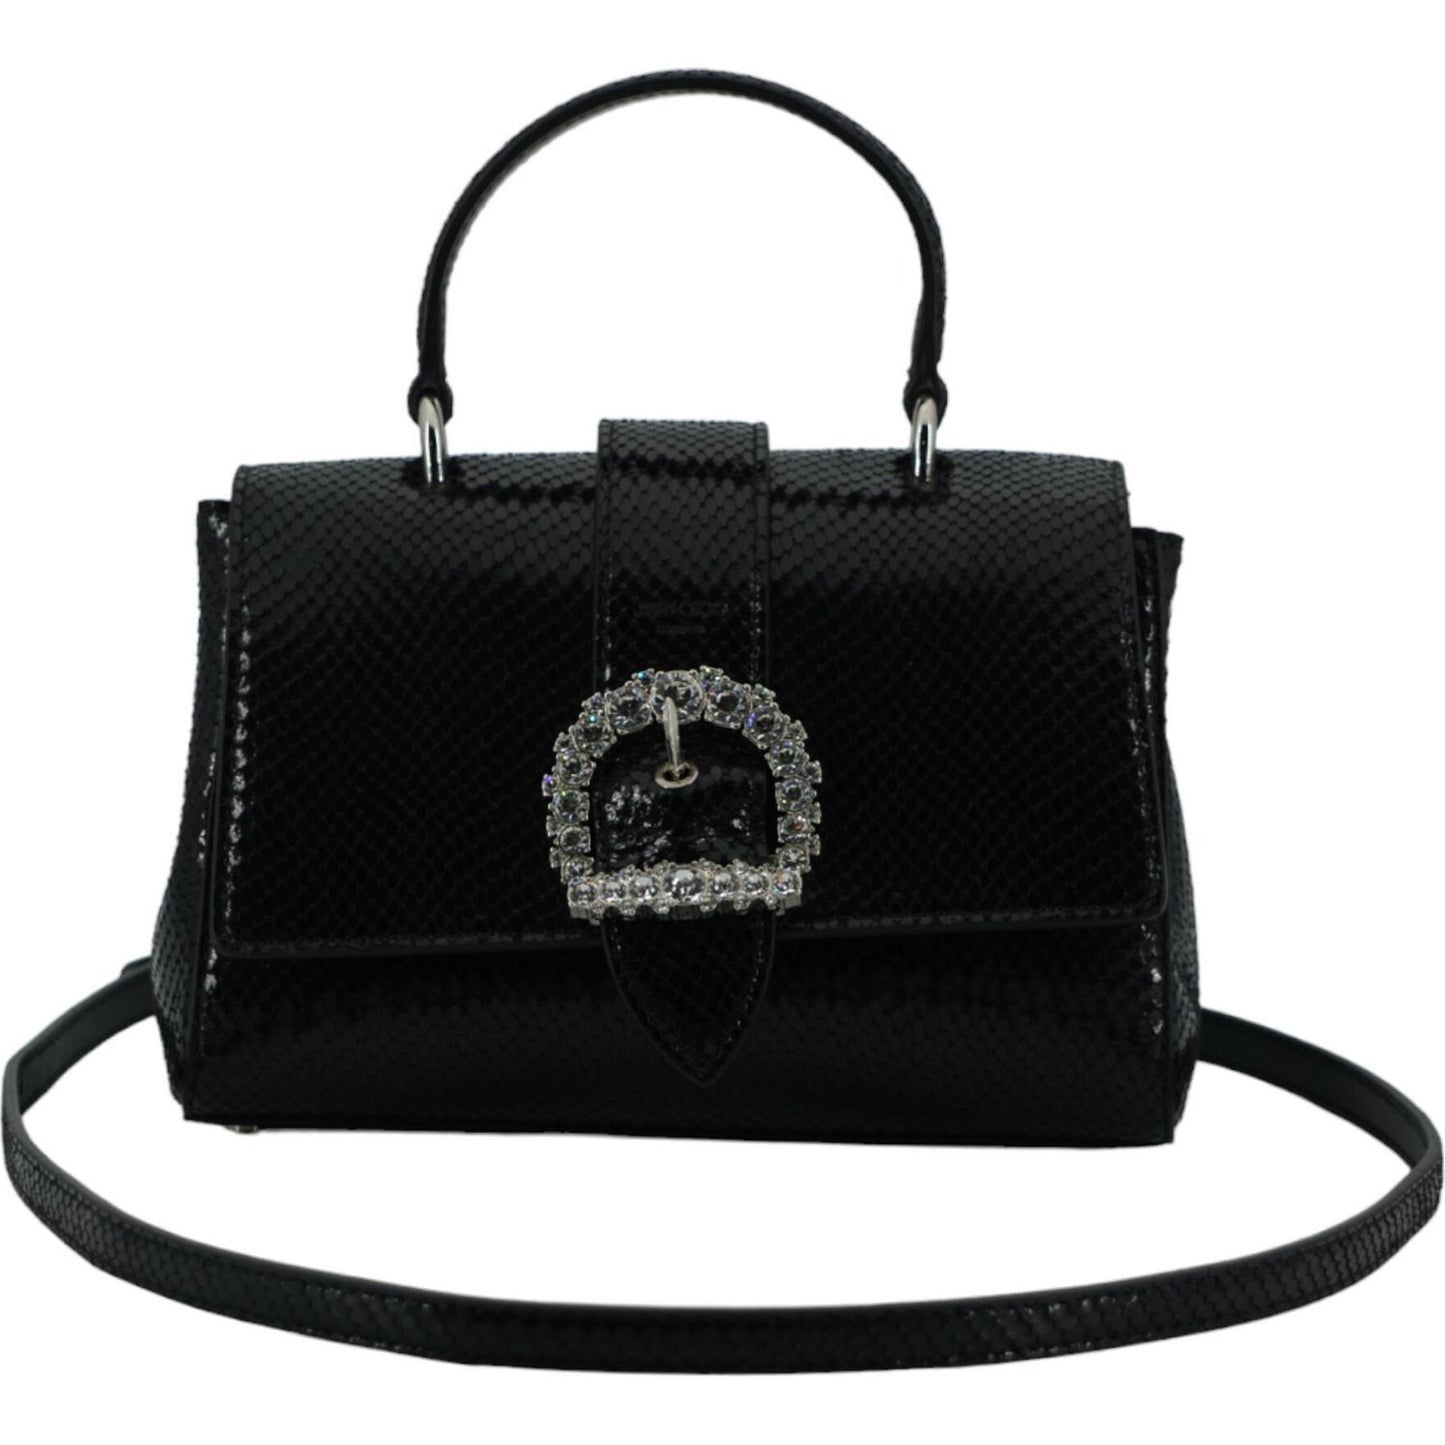 Jimmy Choo Black Leather Top Handle Shoulder Bag black-leather-top-handle-shoulder-bag